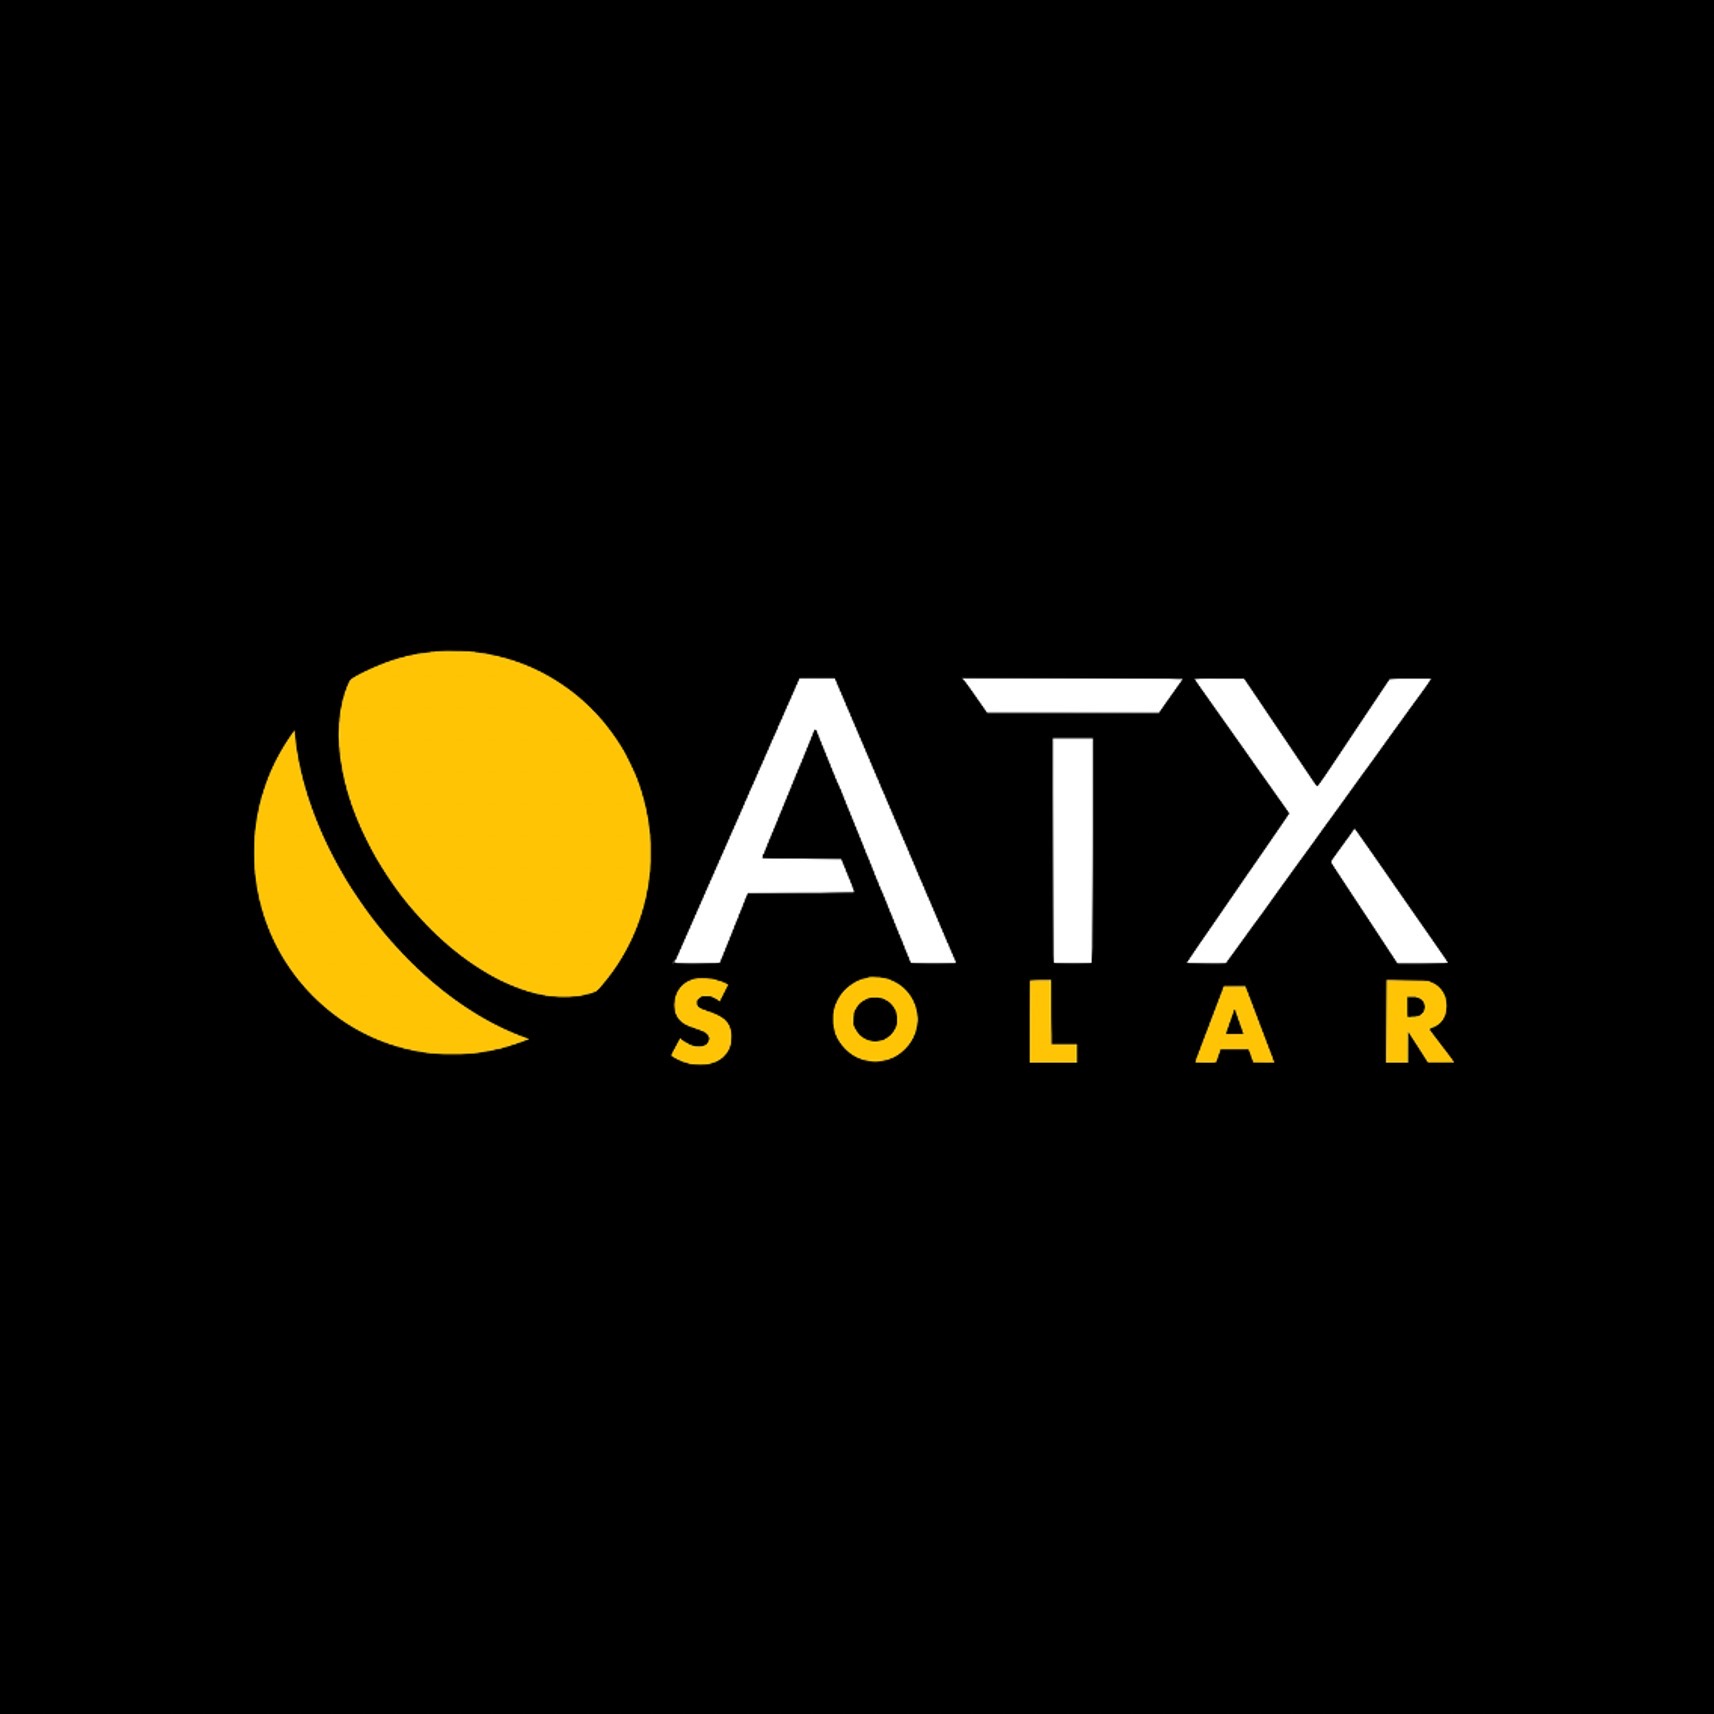 goatxsolar Logo